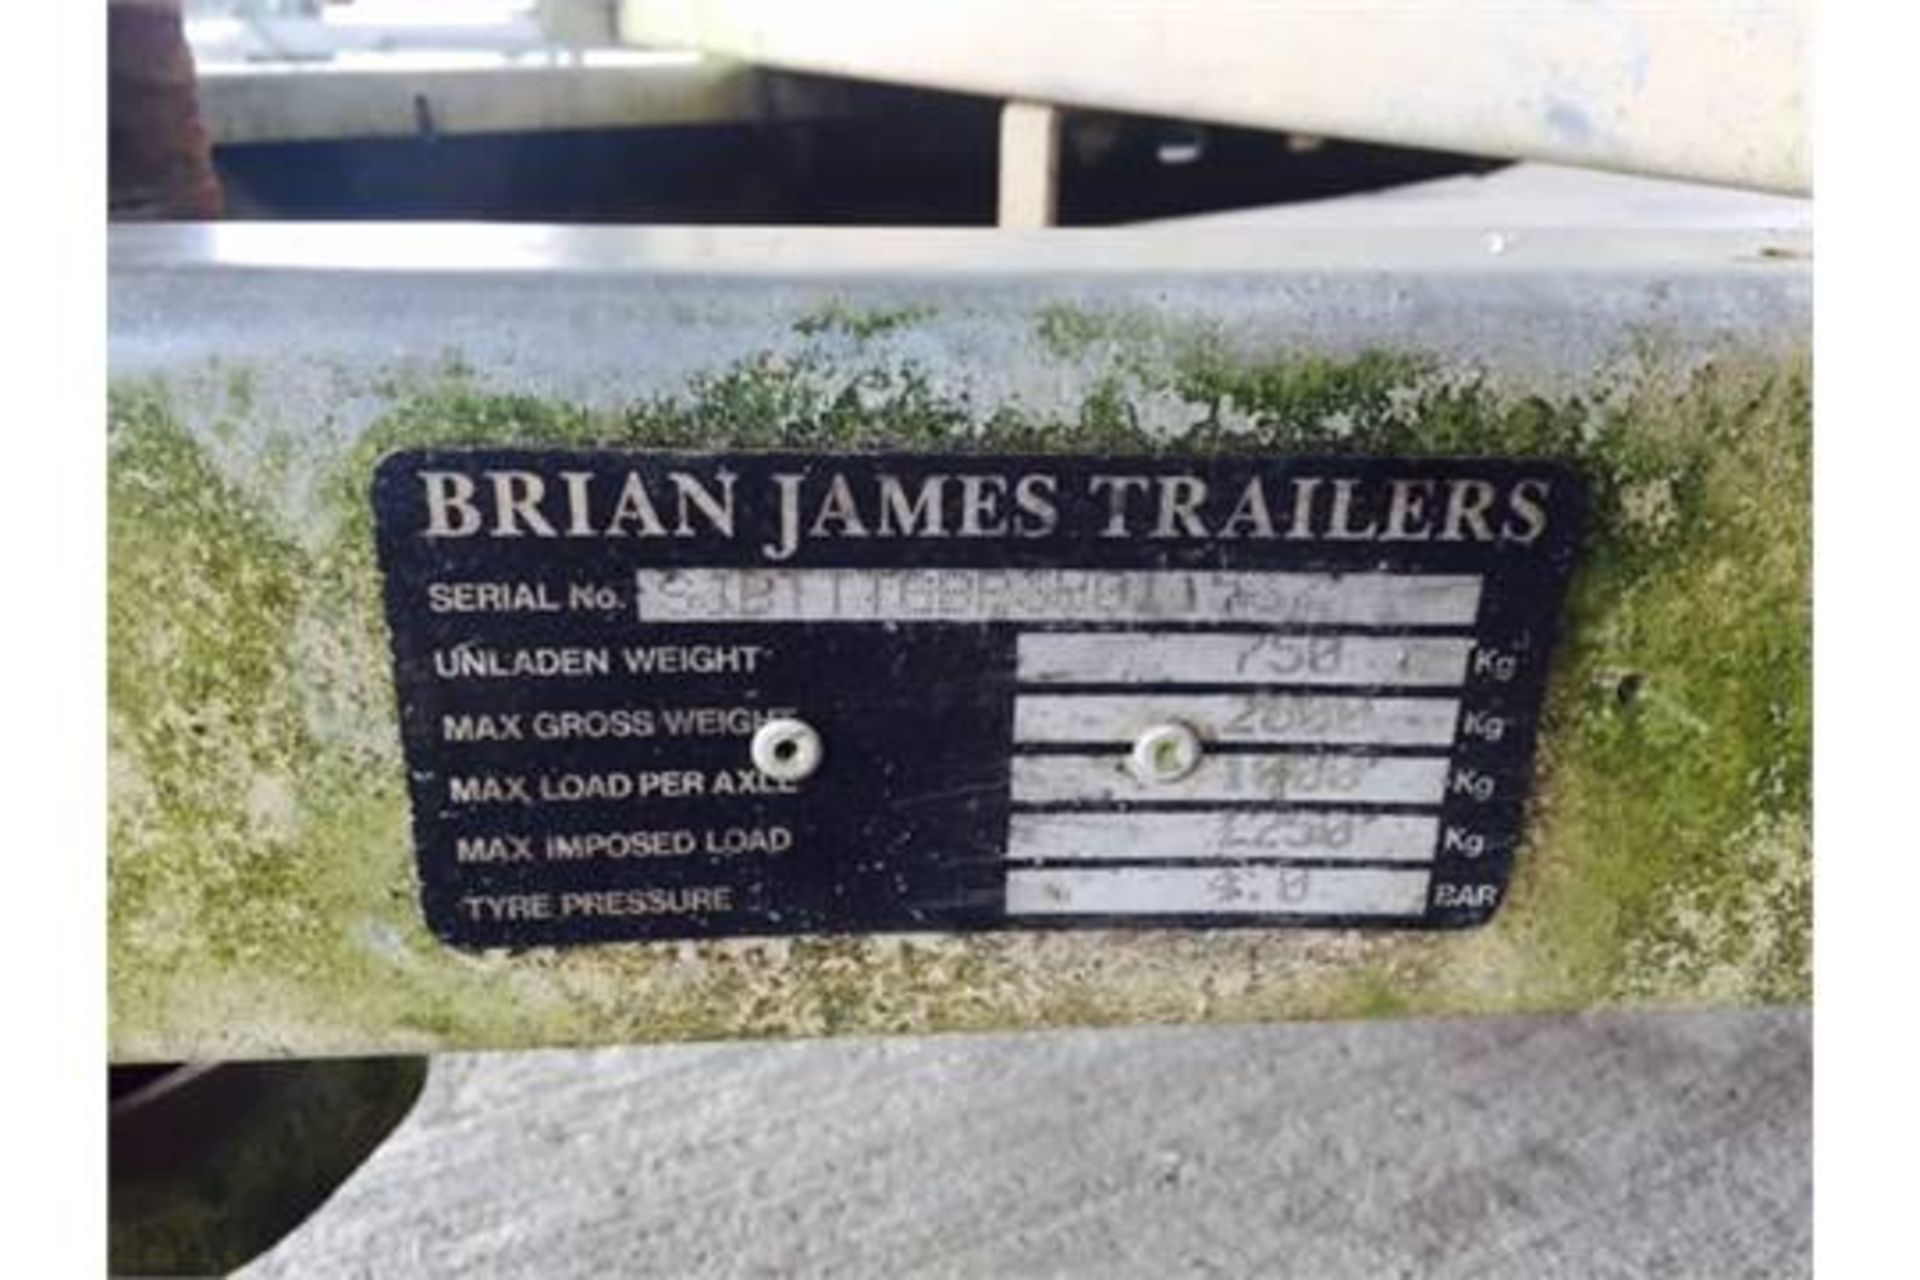 Brian James 4 wheeler drop side trailer - Image 5 of 5